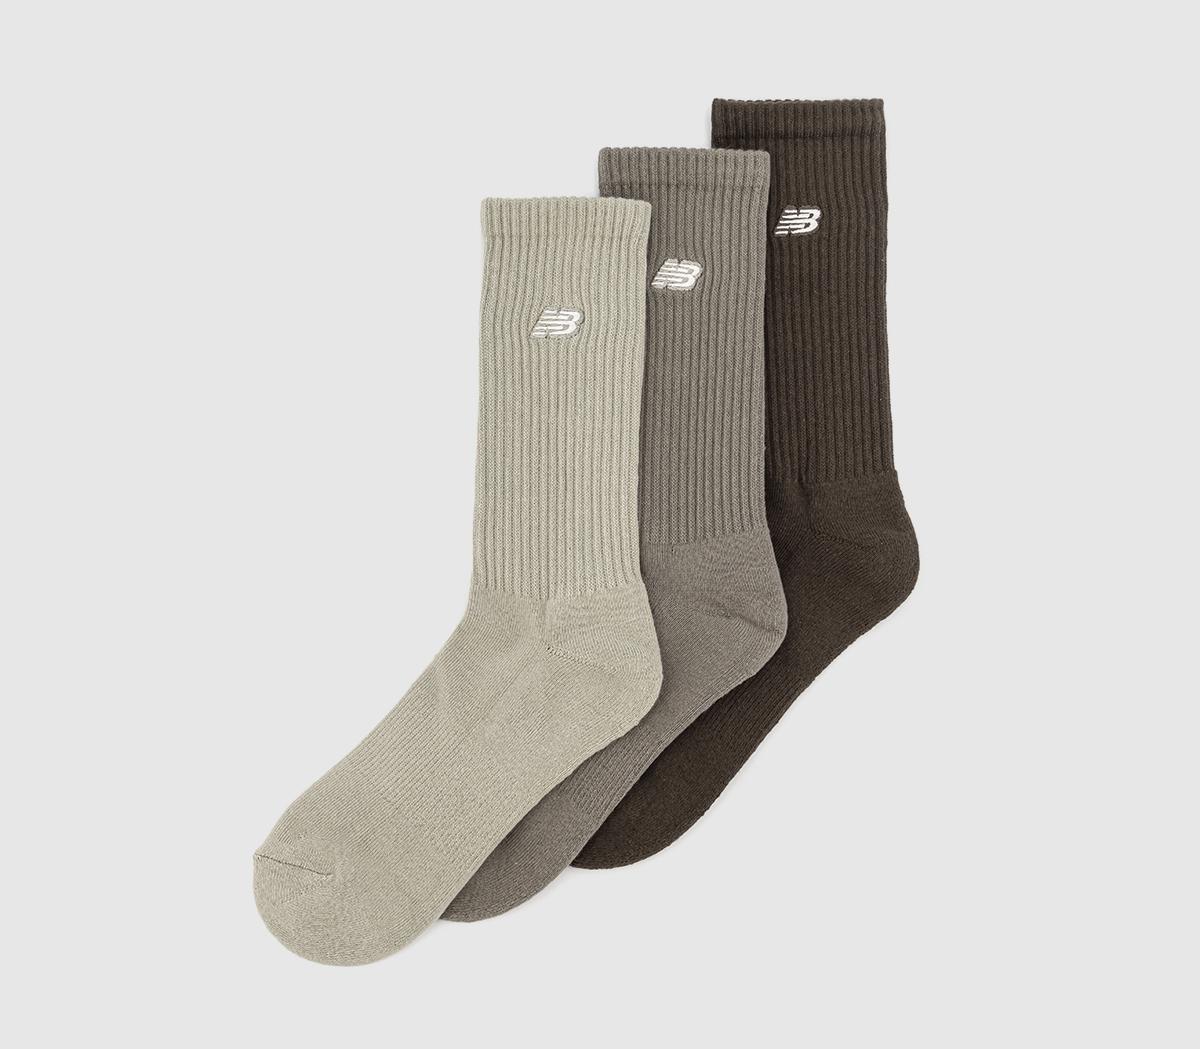 New Balance Socks Nb Patch Melange Brown Multi, L